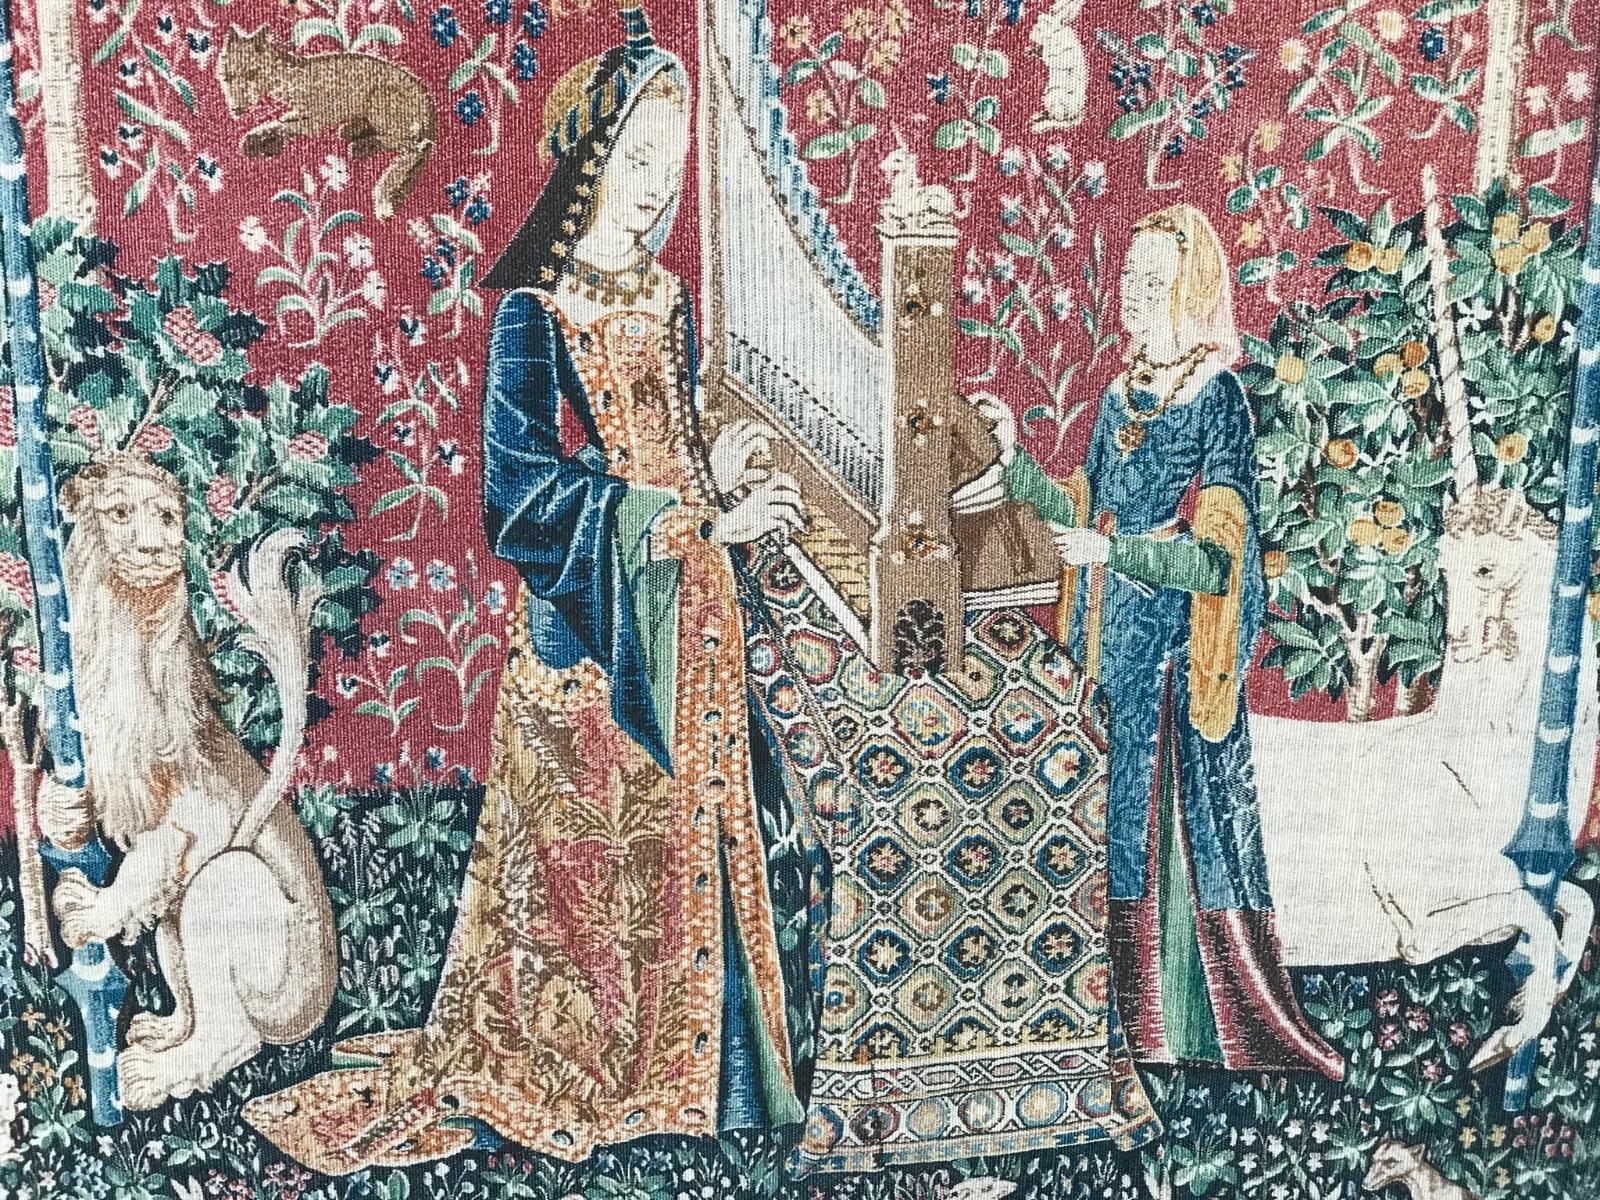 Flemish tapestry